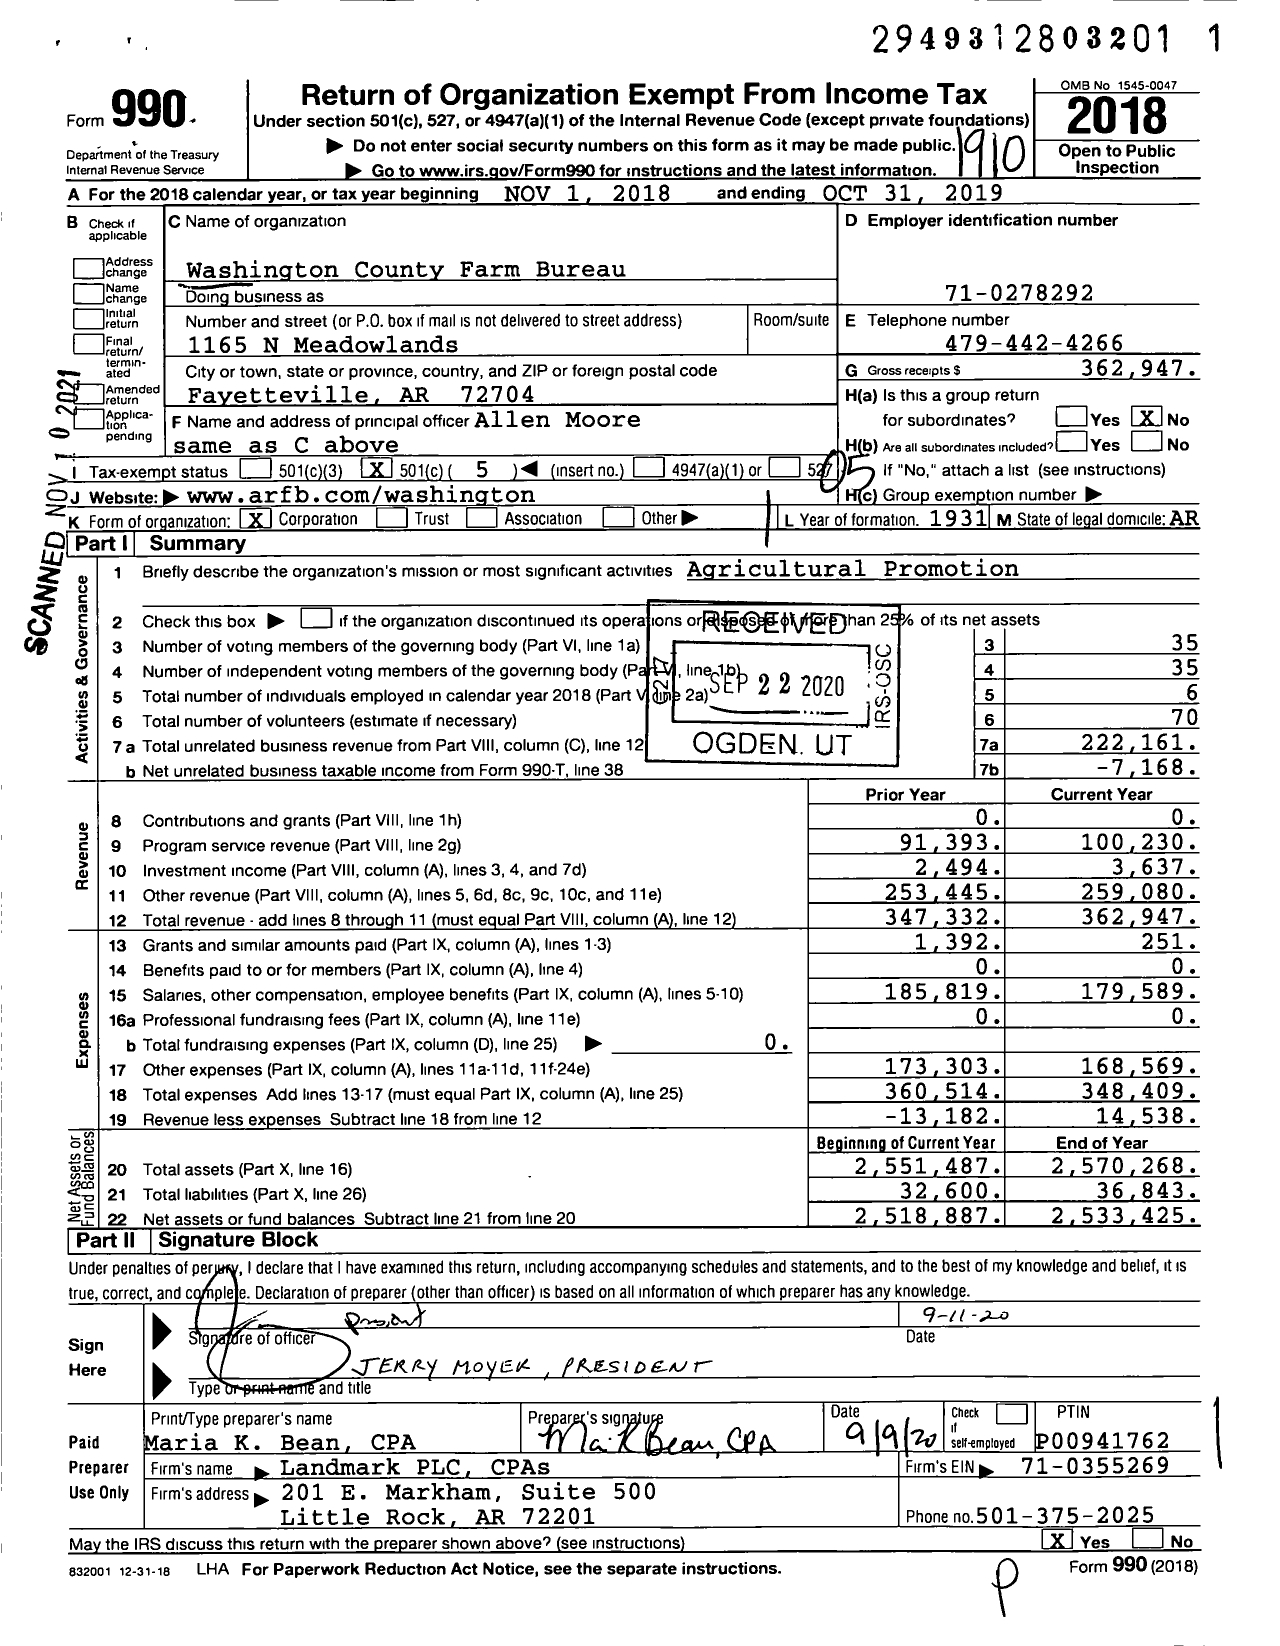 Image of first page of 2018 Form 990O for Washington County Farm Bureau